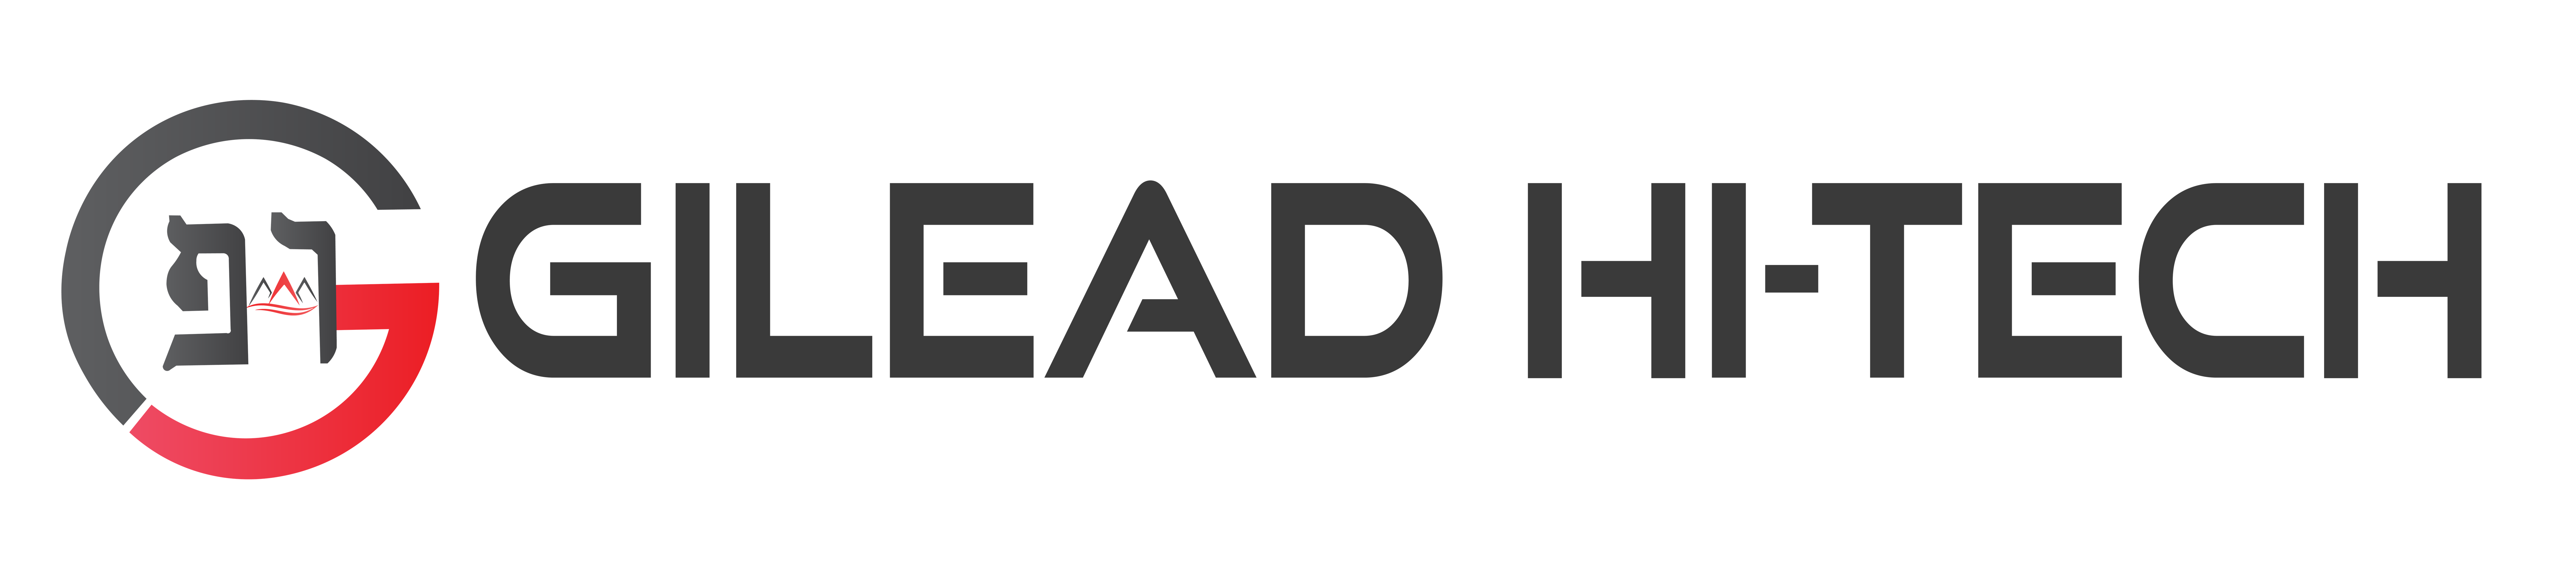 Gilead Hi-Tech Pvt Ltd. Logo